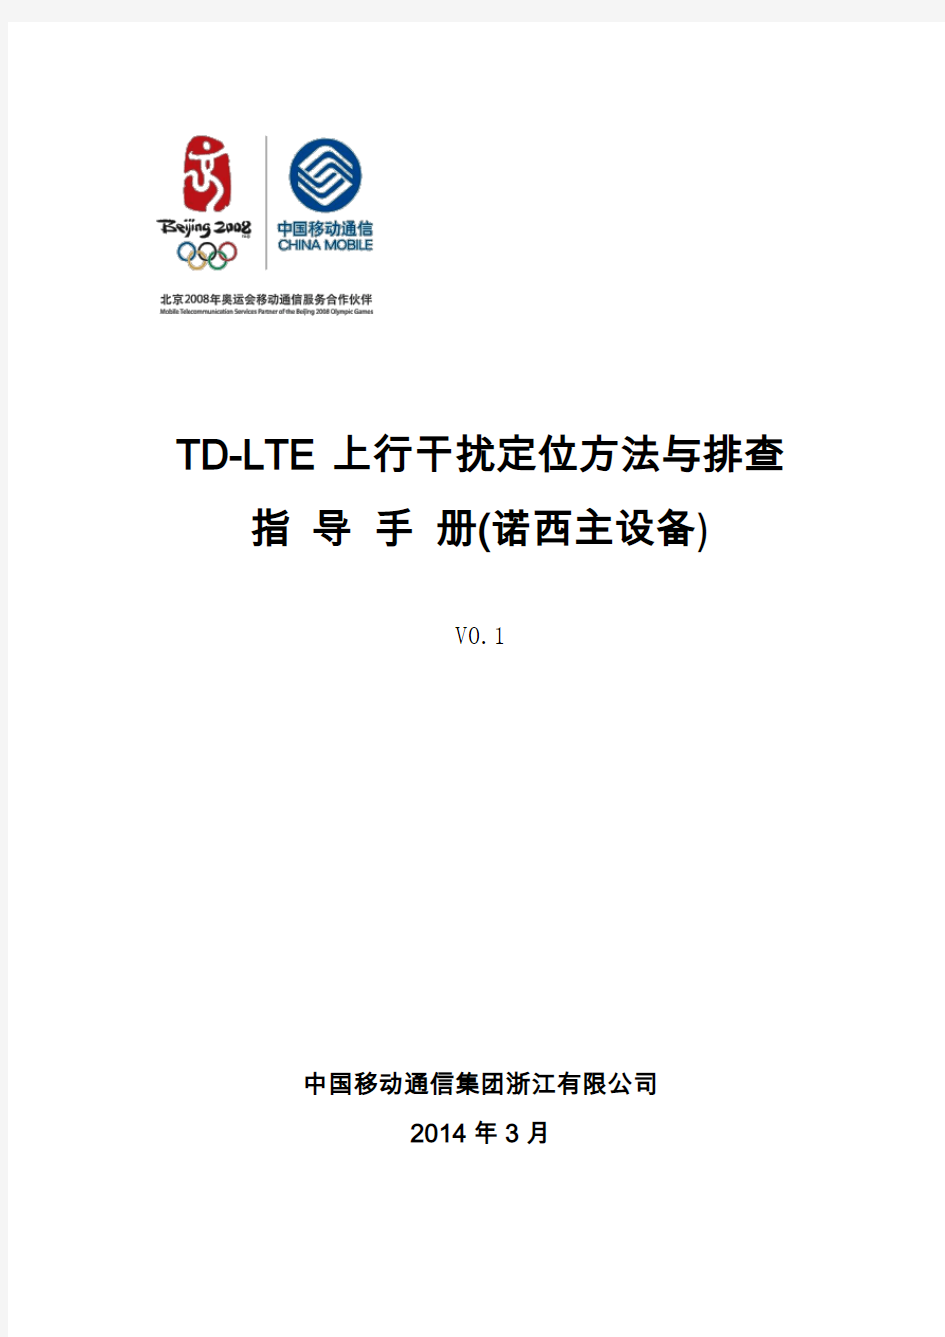 TD-LTE上行干扰定位方法与排查指导手册